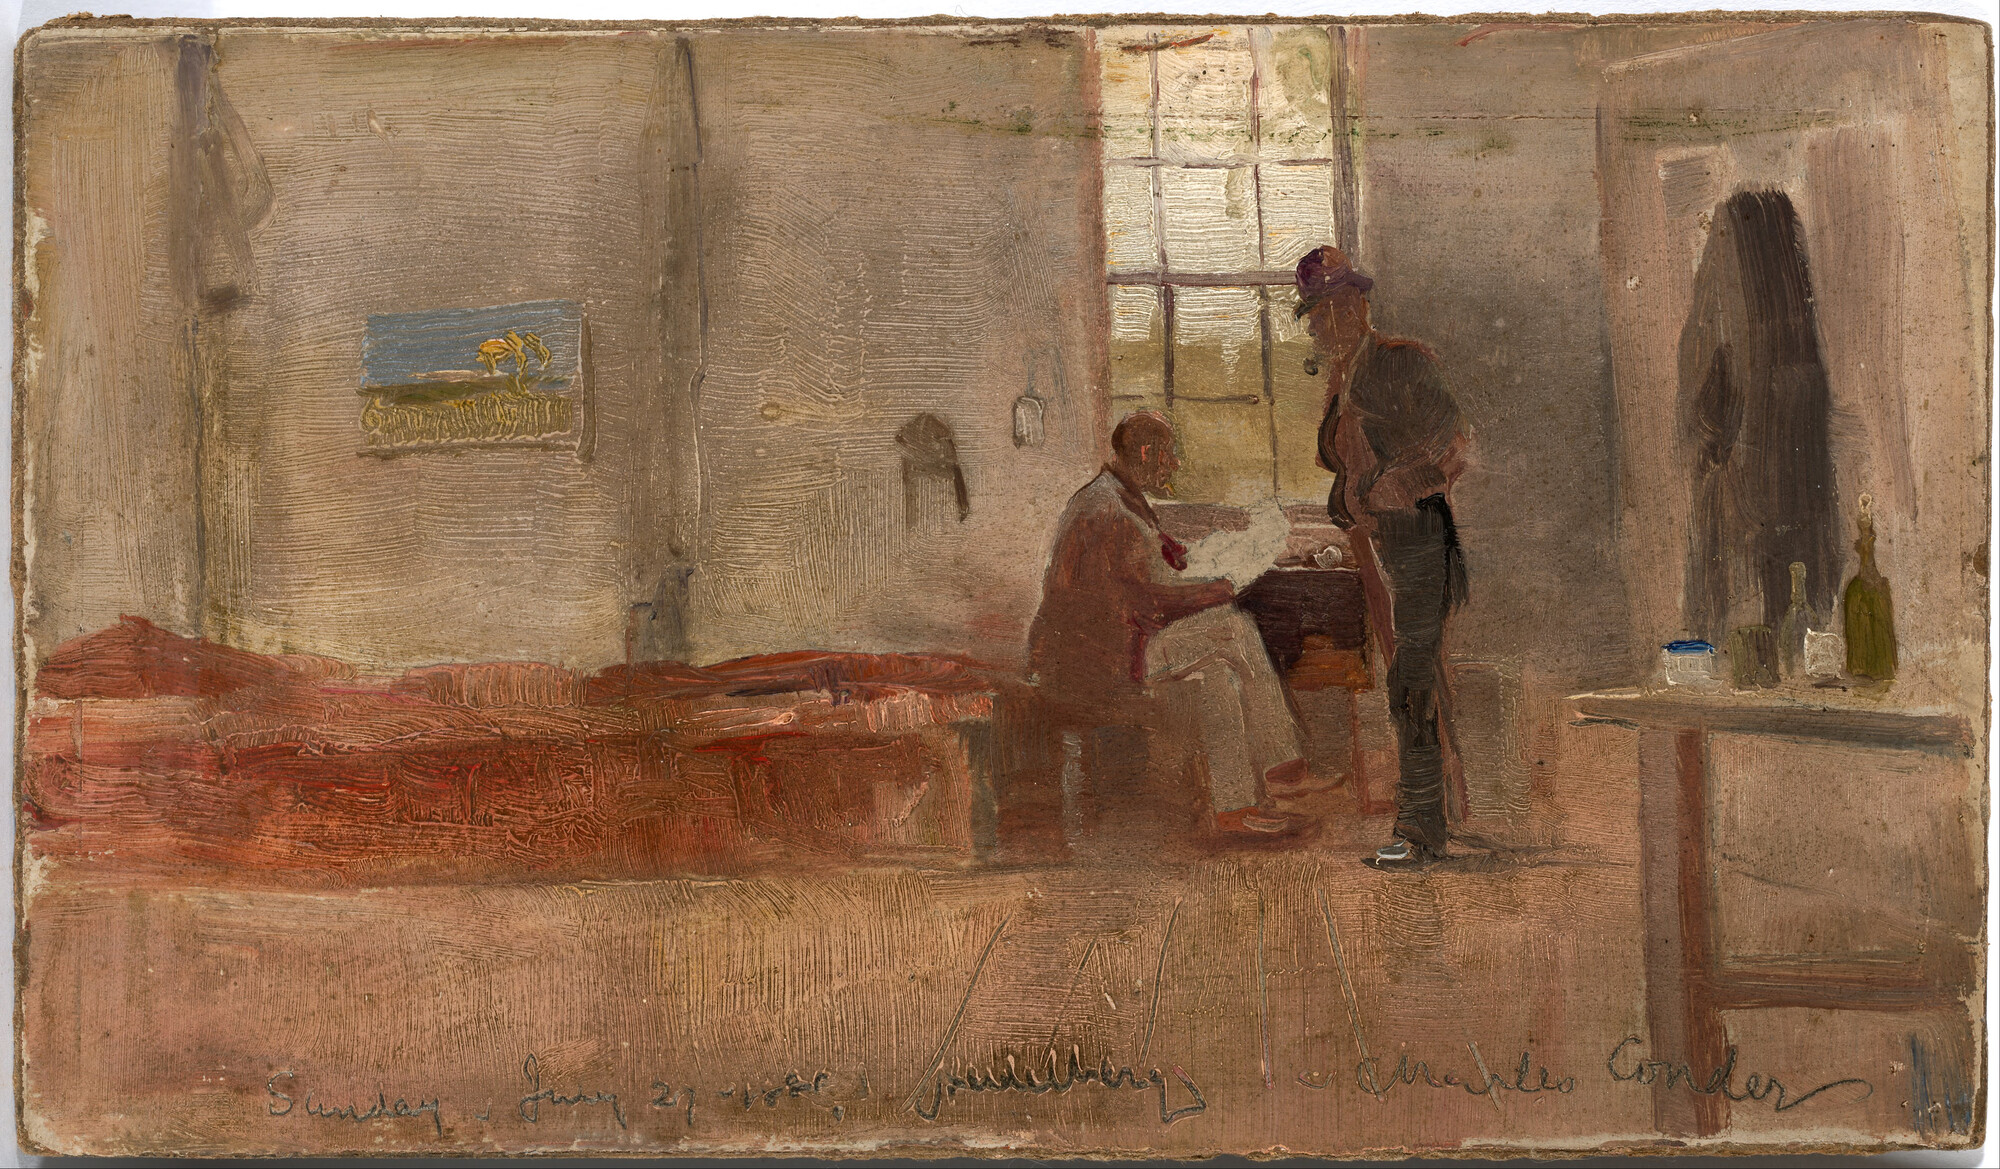 Charles Conder, <em>Impressionists’ Camp</em>, 1889, oil on paper mounted on cardboard, 13.9 x 24 cm, National Gallery of Australia